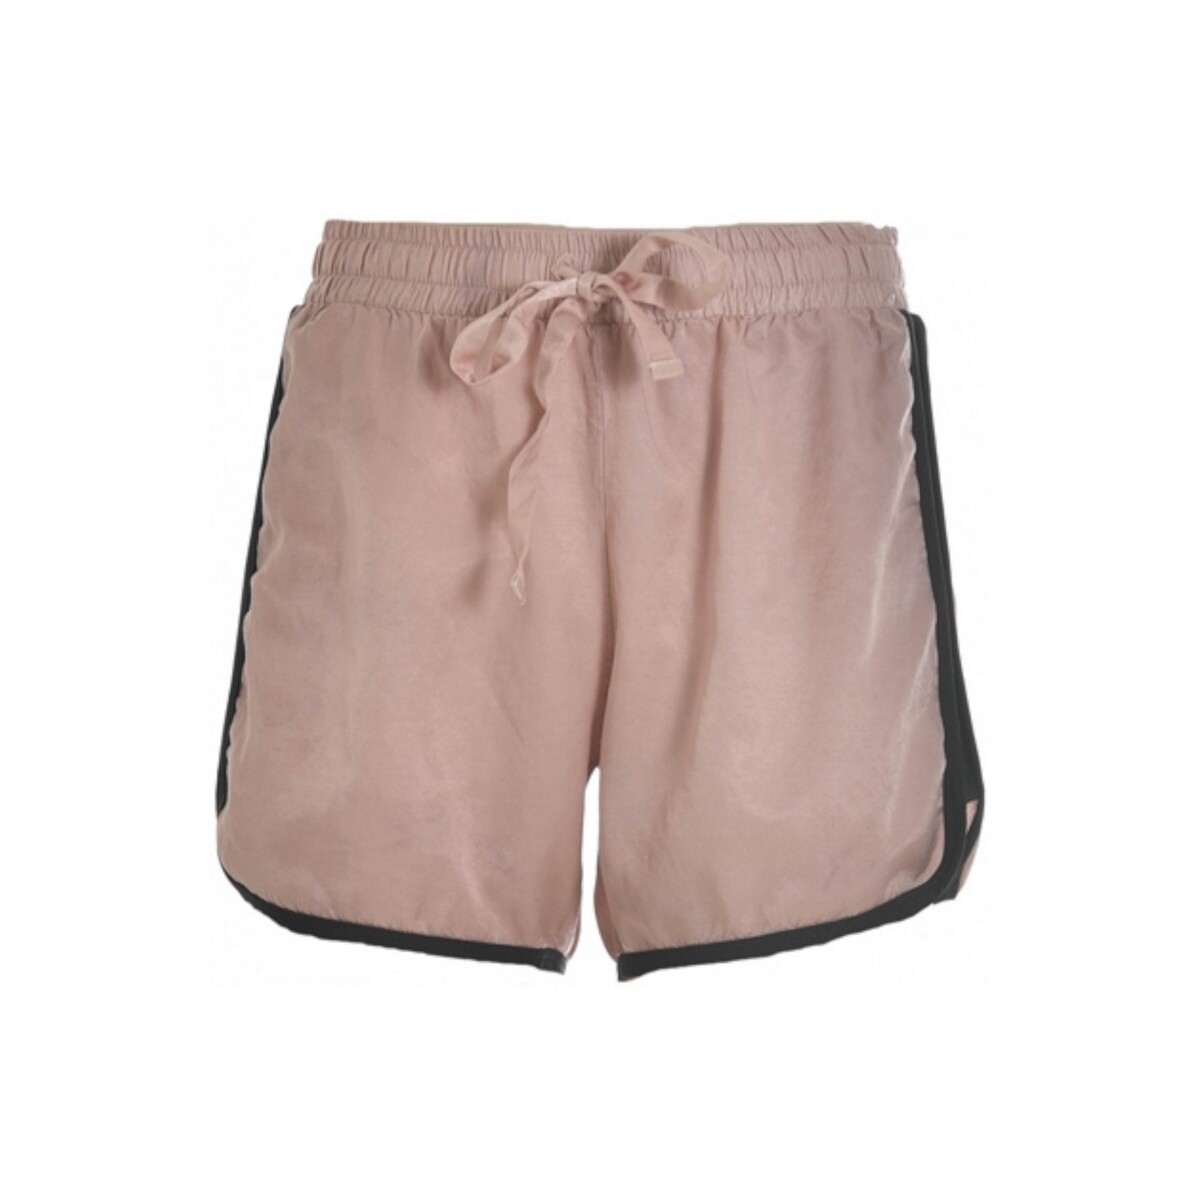 textil Mujer Shorts / Bermudas Deha B74855 Rosa